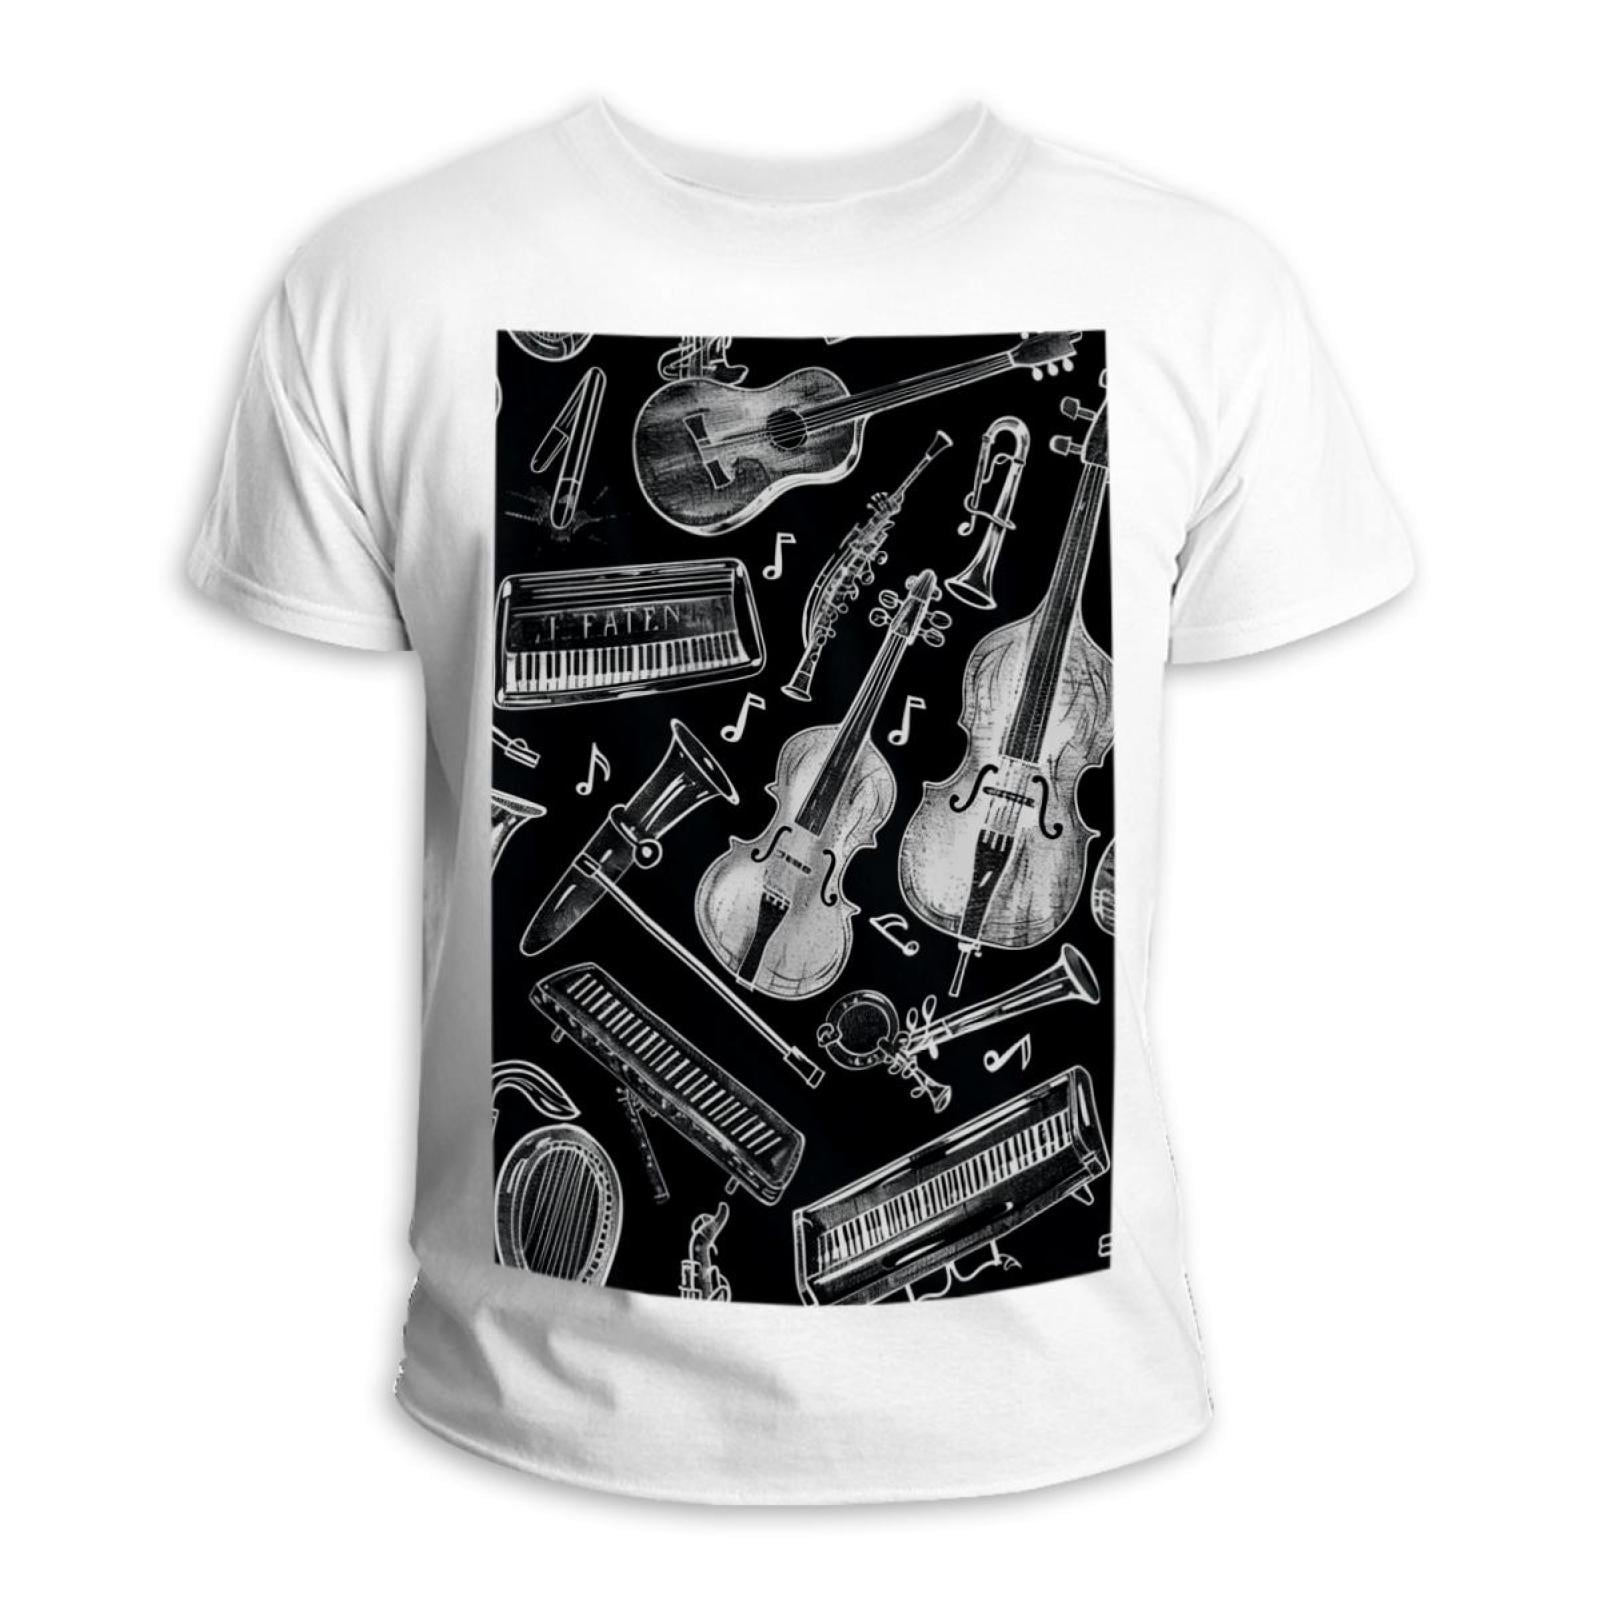 Mens T-Shirts, Cotton T Shirts for Men, Musical Instrument Guitar Piano ...